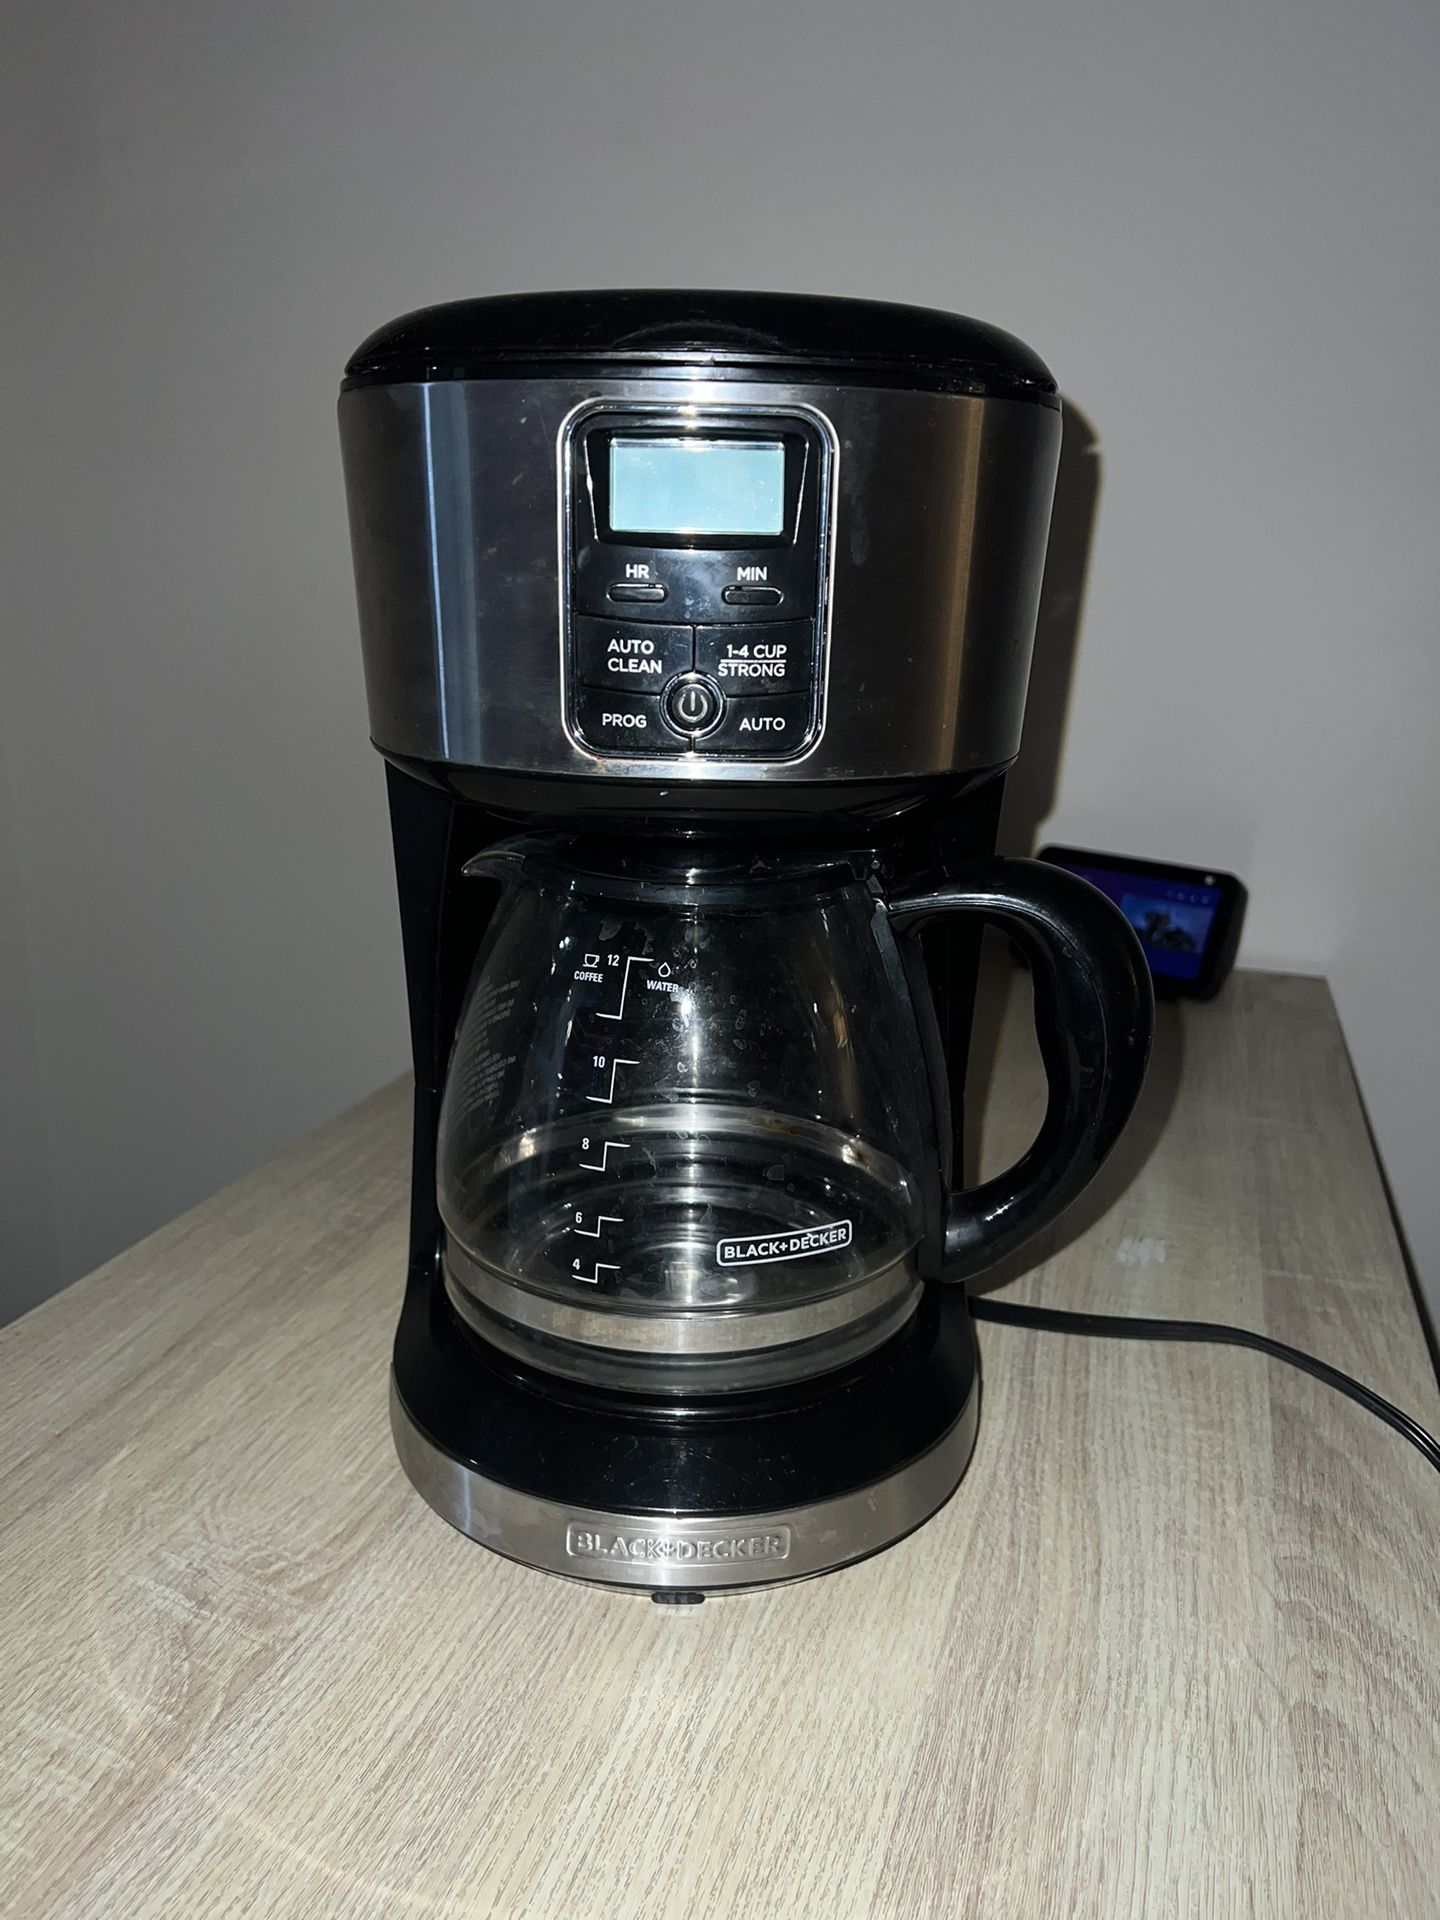 Black decker 12-cup Coffee maker